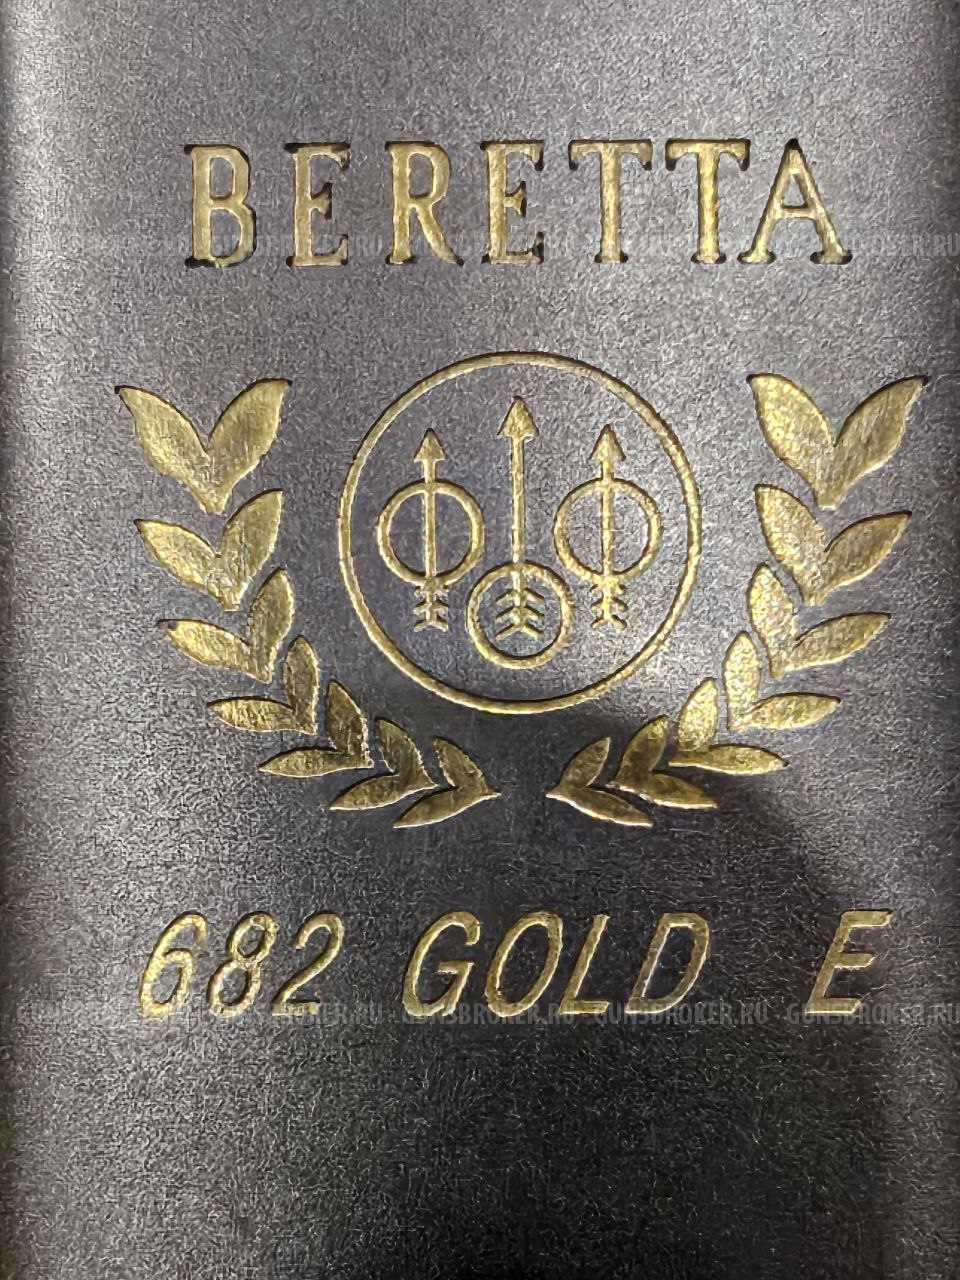 BERETTA GOLD 682 E